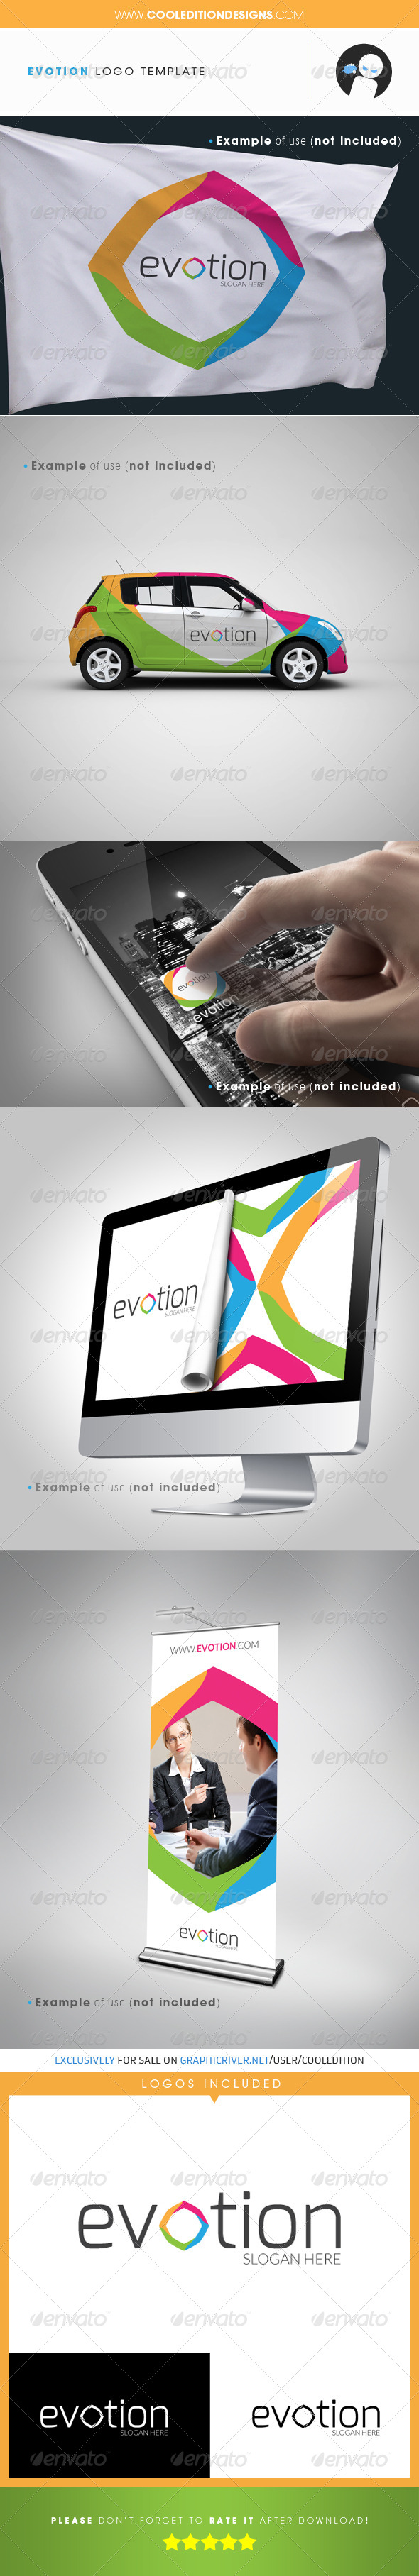 Evotion - Logo Template